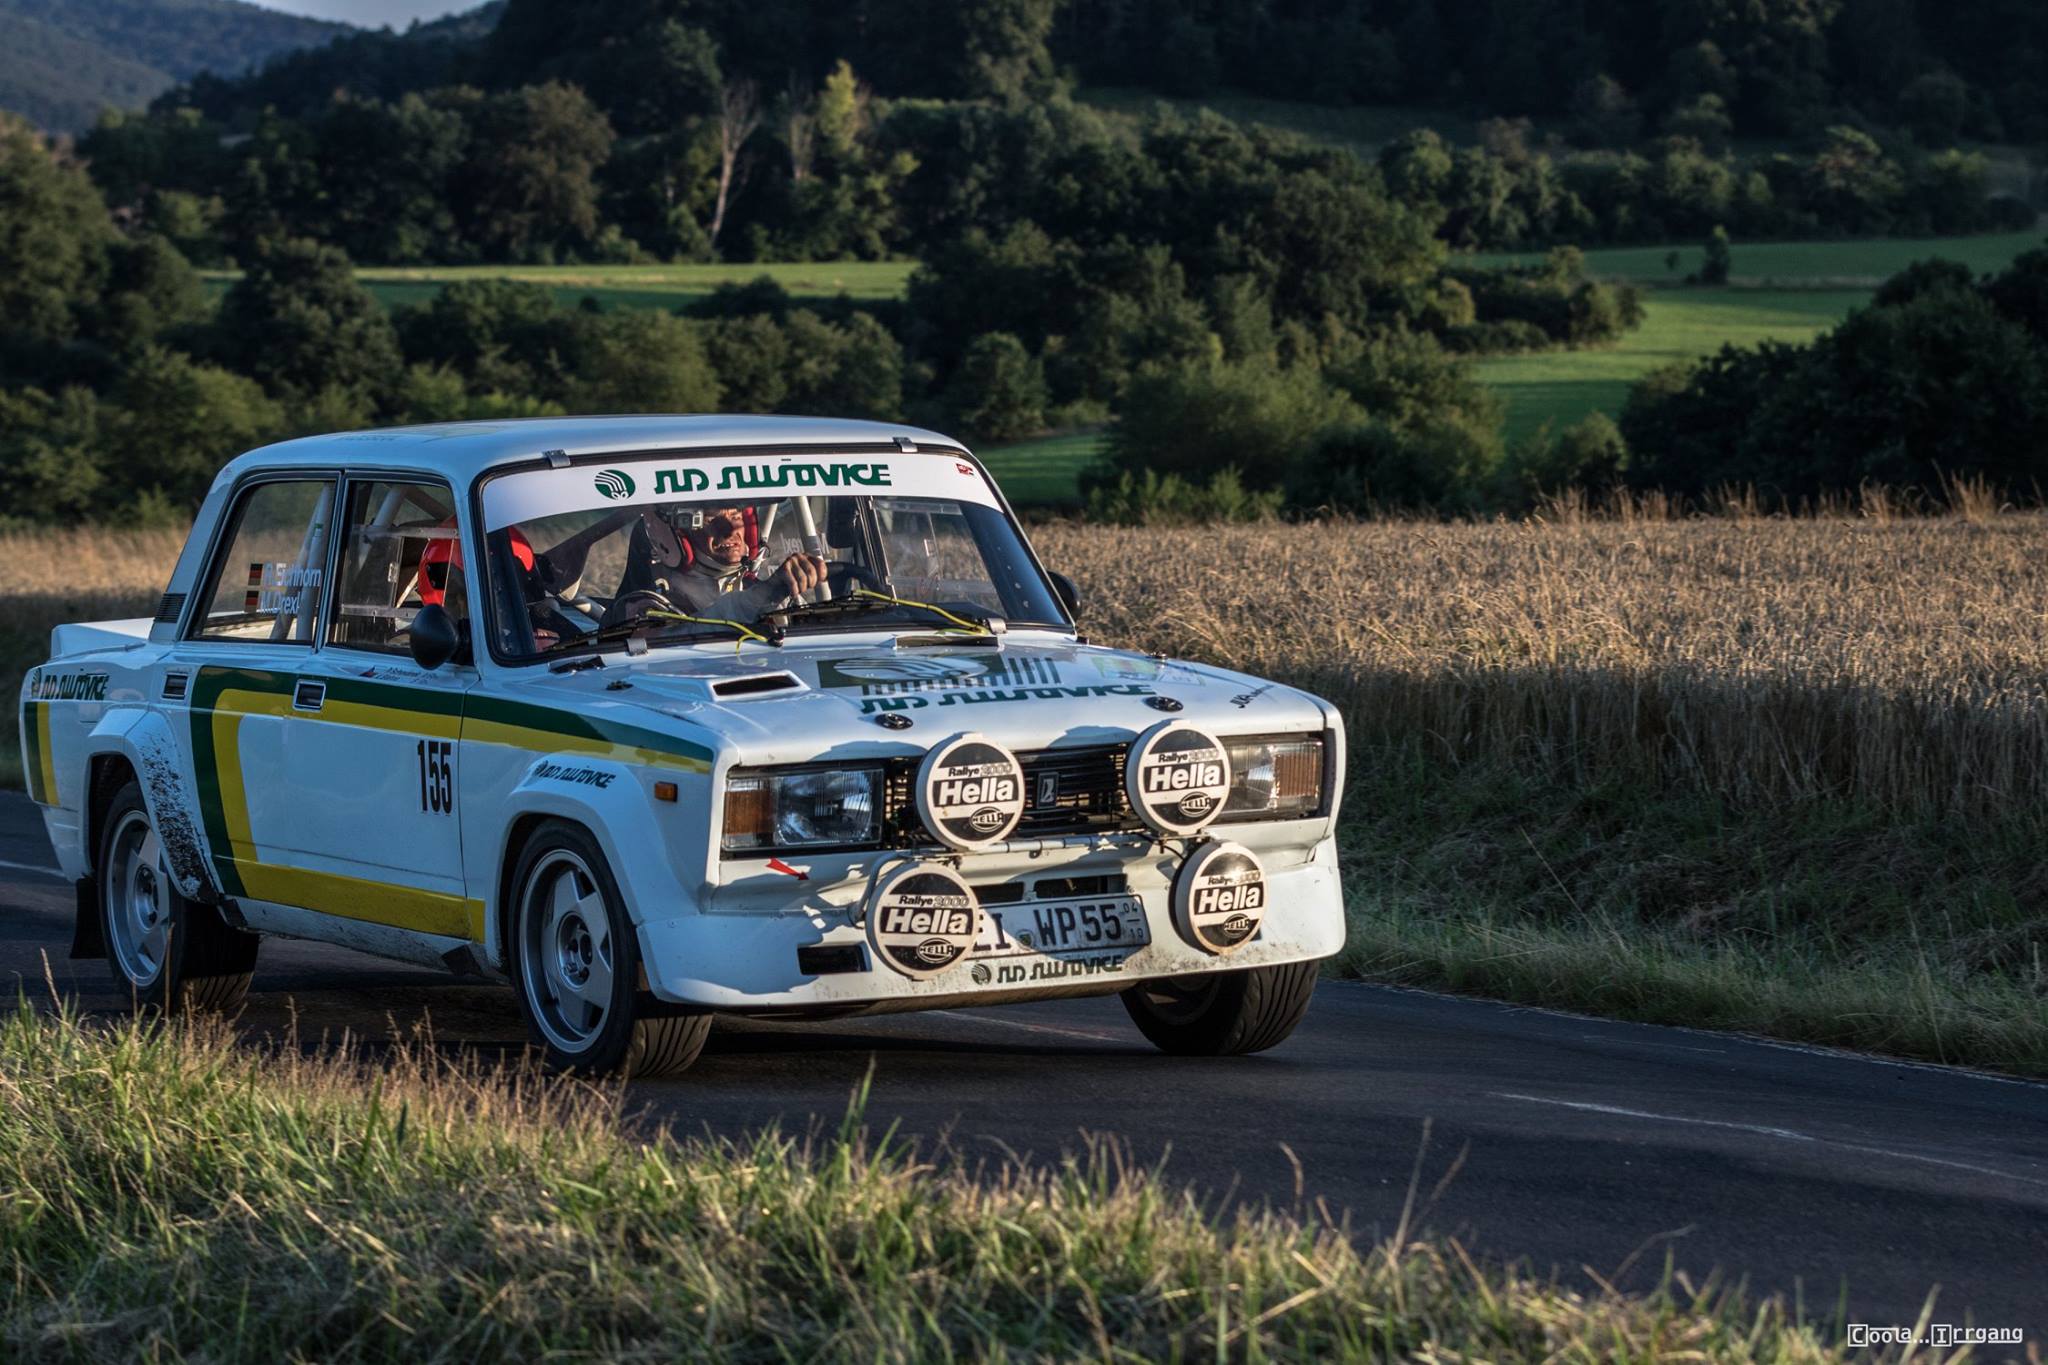 57. Wartburg Rallye